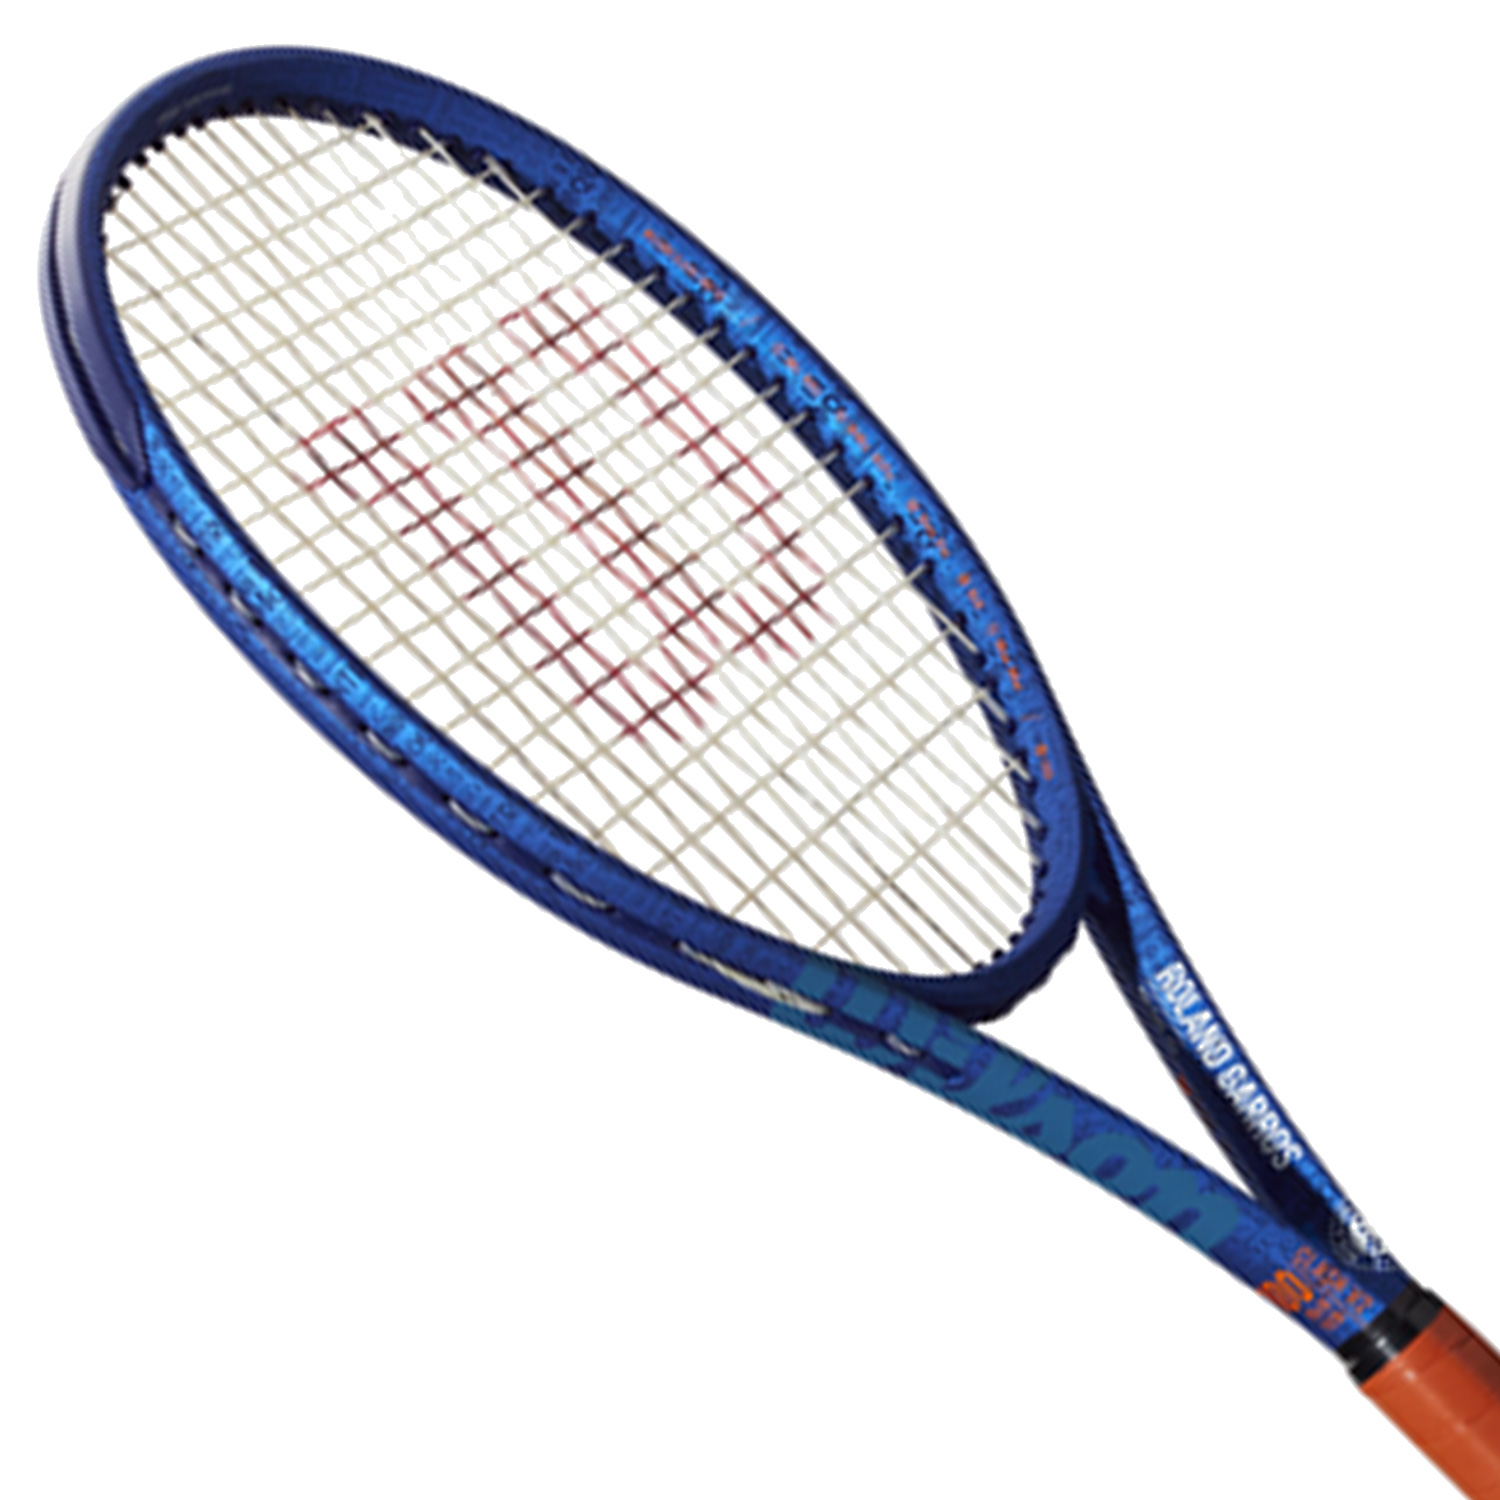 Wilson Tennis Racket Equipment Bag Adjustable Padded Shoulder Strap Classic Look 